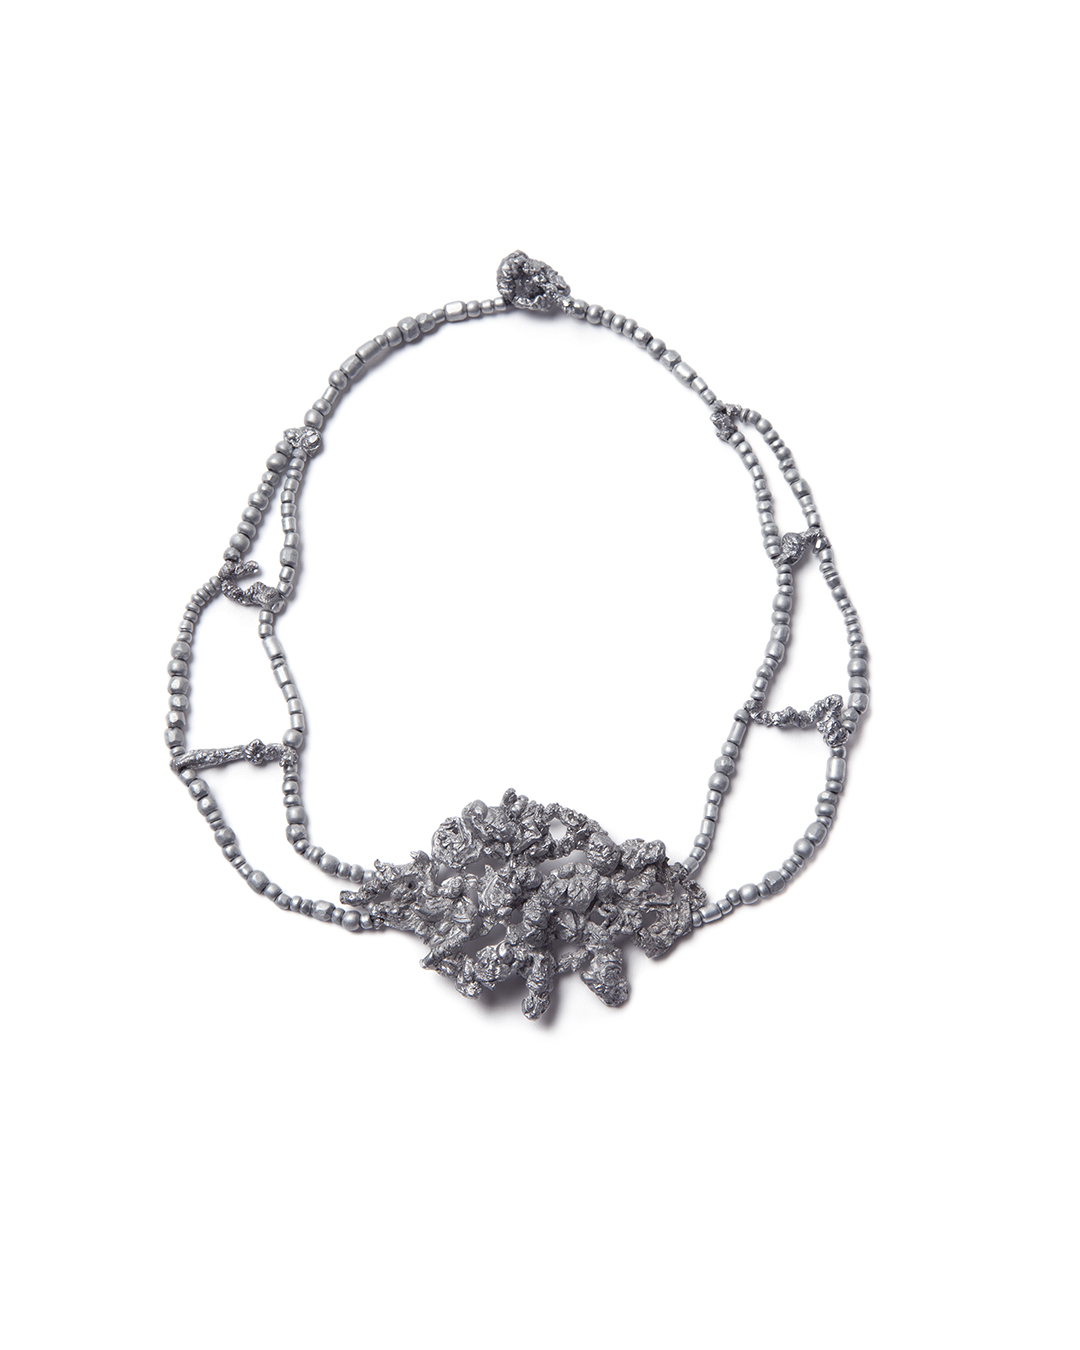 Barbara Schrobenhauser, Ropes I, 2015, necklace; aluminium, string, L 420; element 70 x 35 x 14 mm, €1575